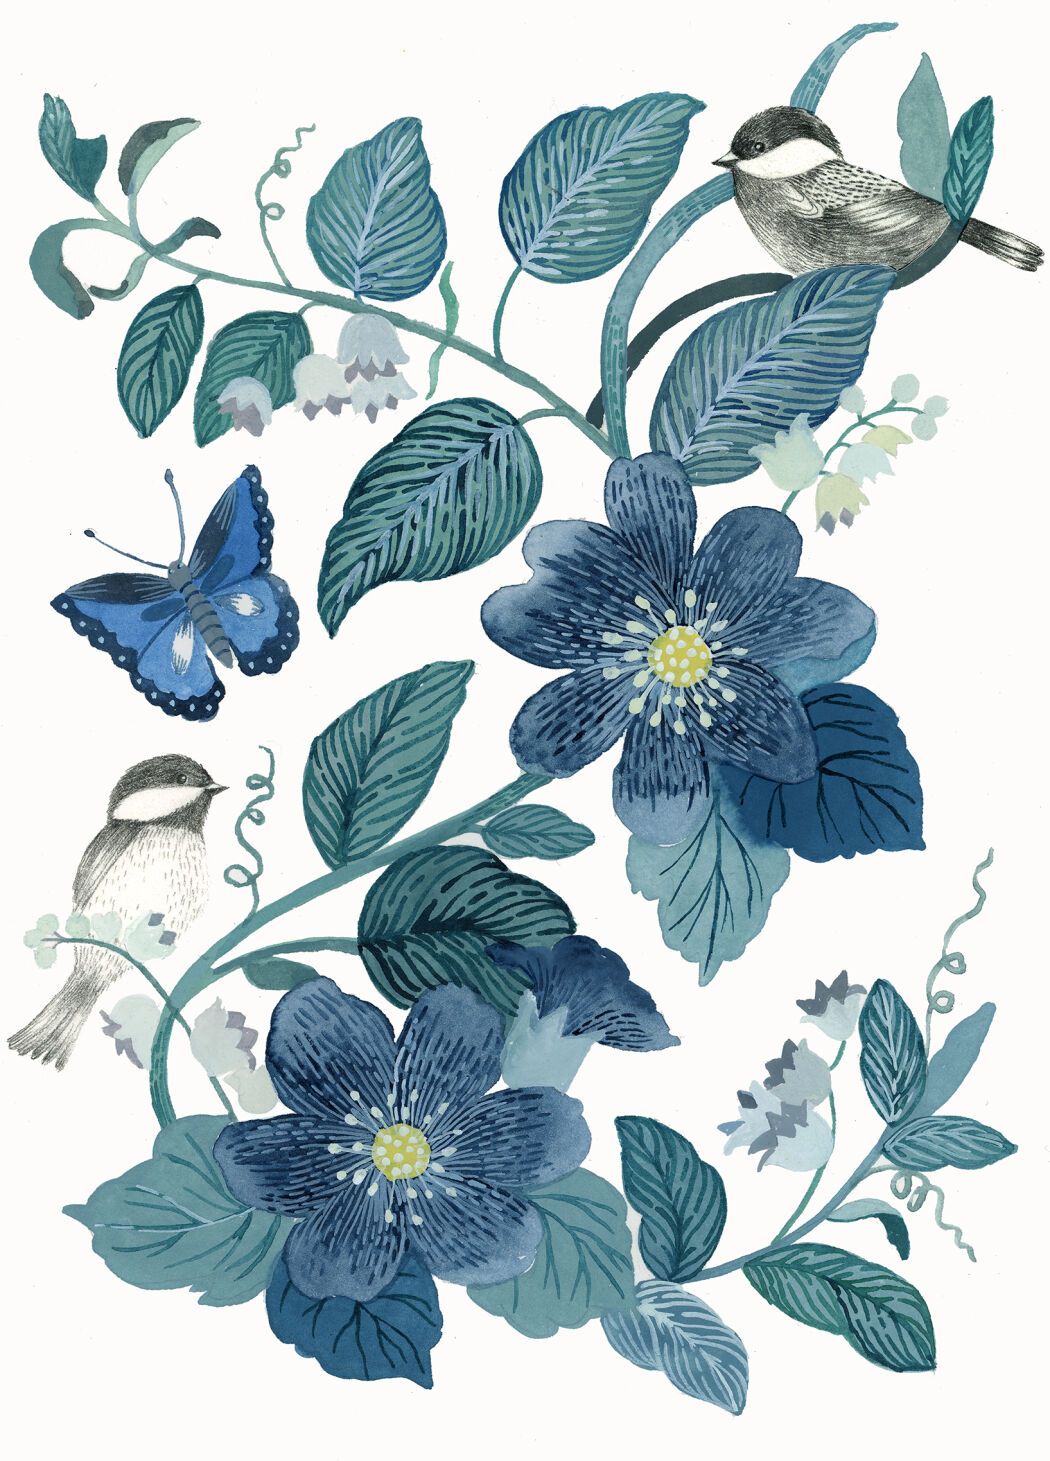 Botanical motif by the artist Malin Gyllensvaan